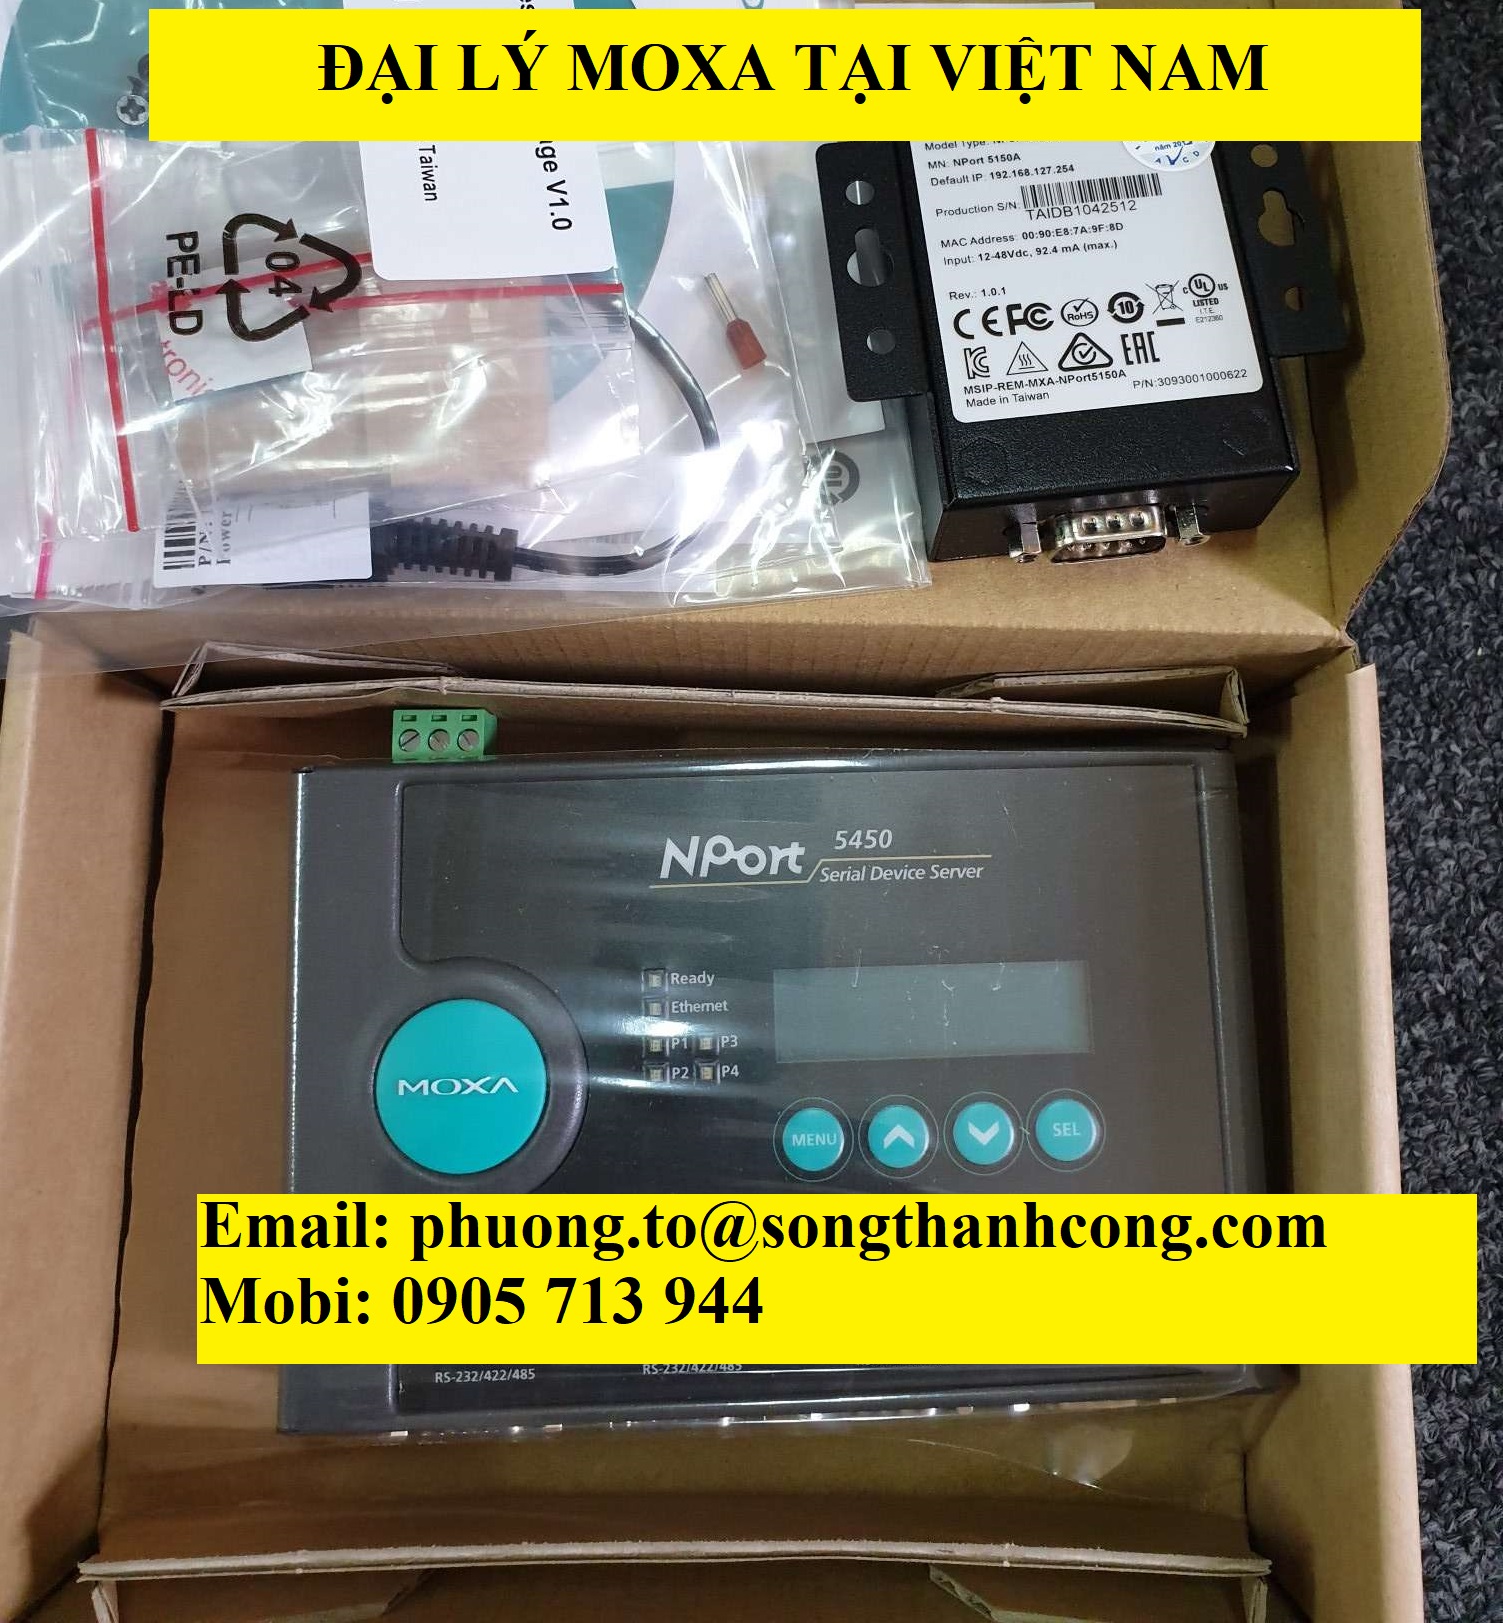 nport-5450-bo-chuyen-doi-4-cong-rs232-485-422-sang-ethernet-moxa-viet-nam-moxa-vietnam.png